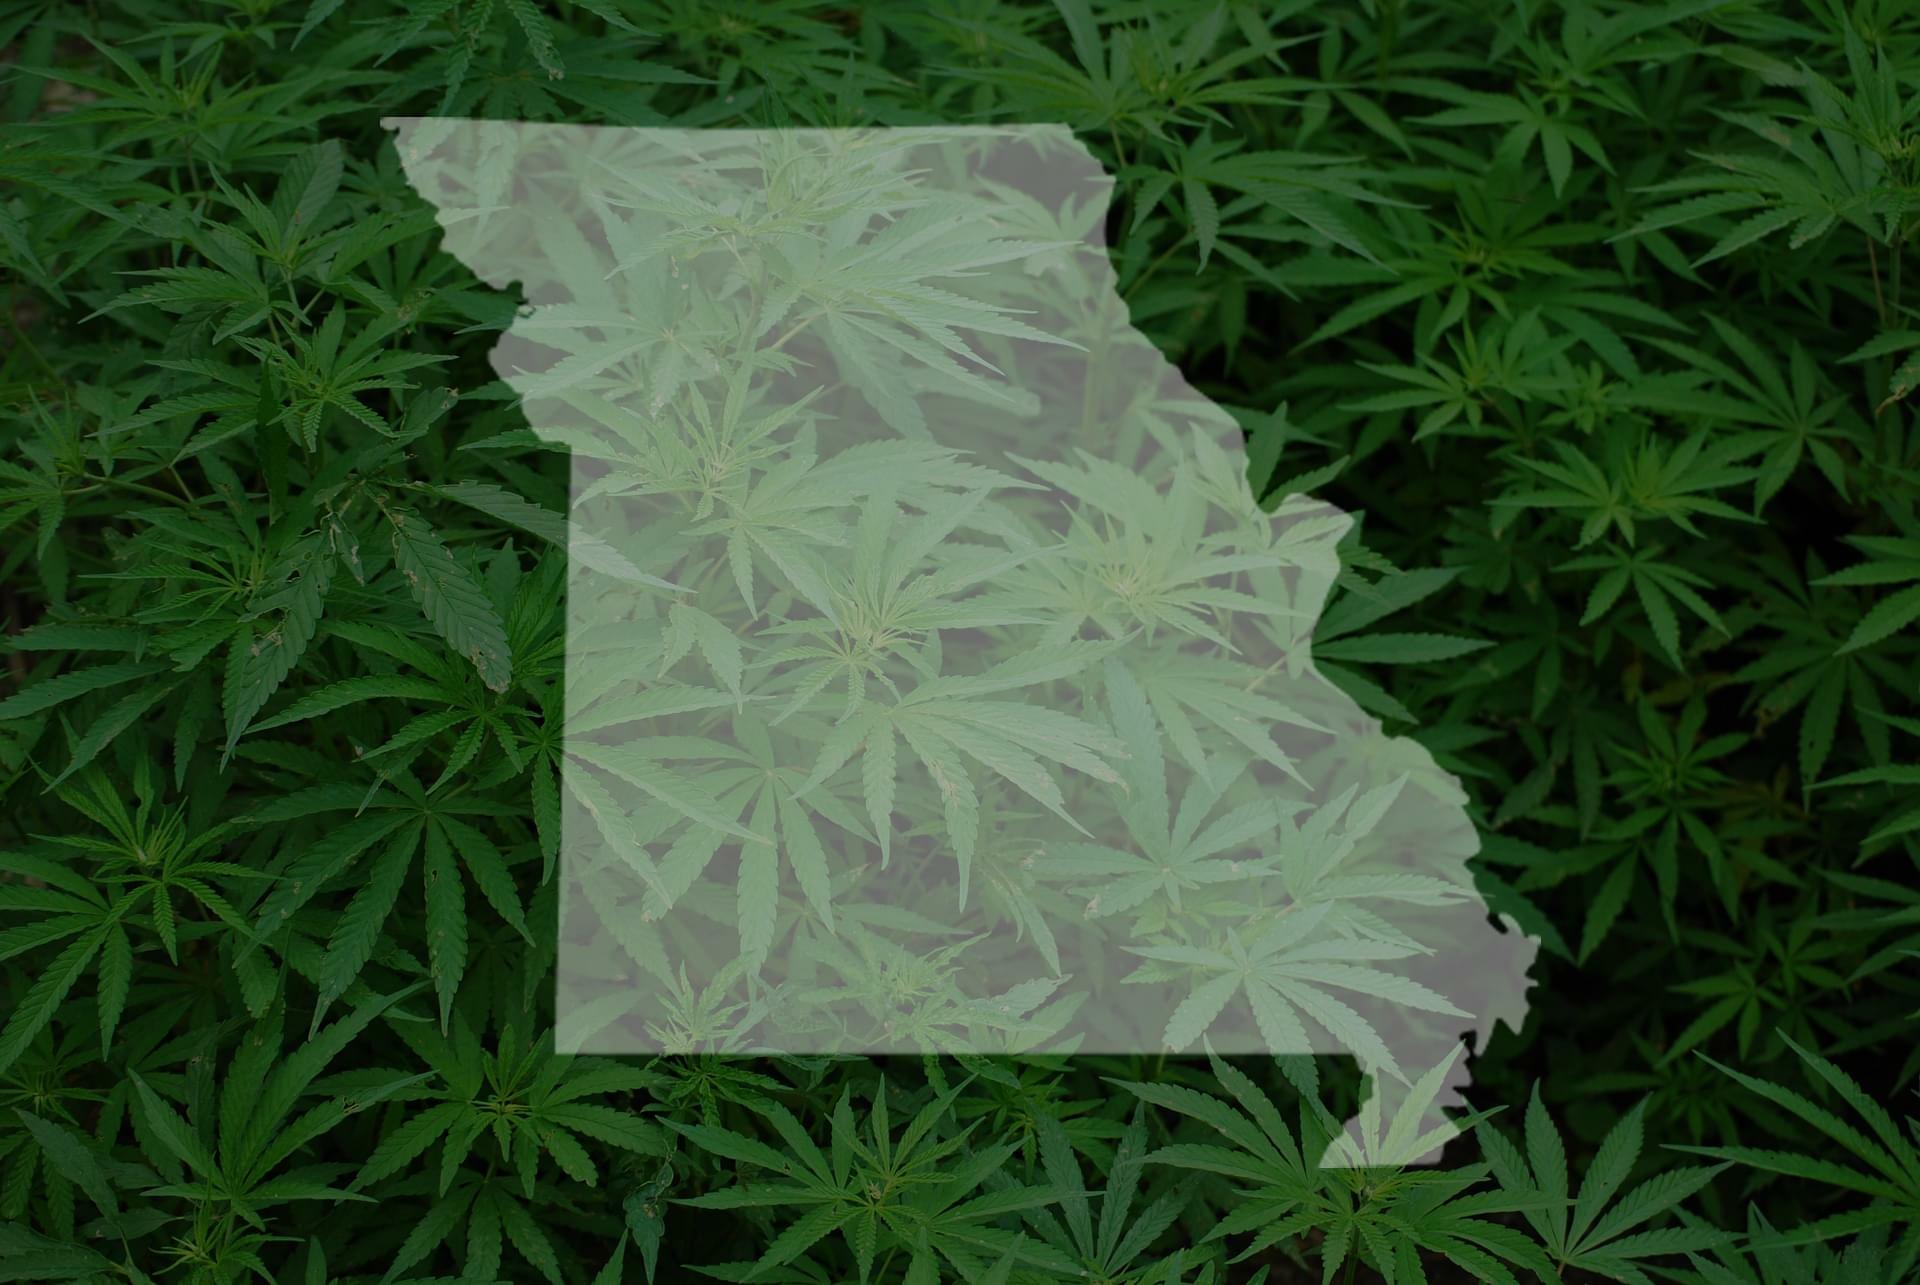 Attempts to Legalize Marijuana in Missouri